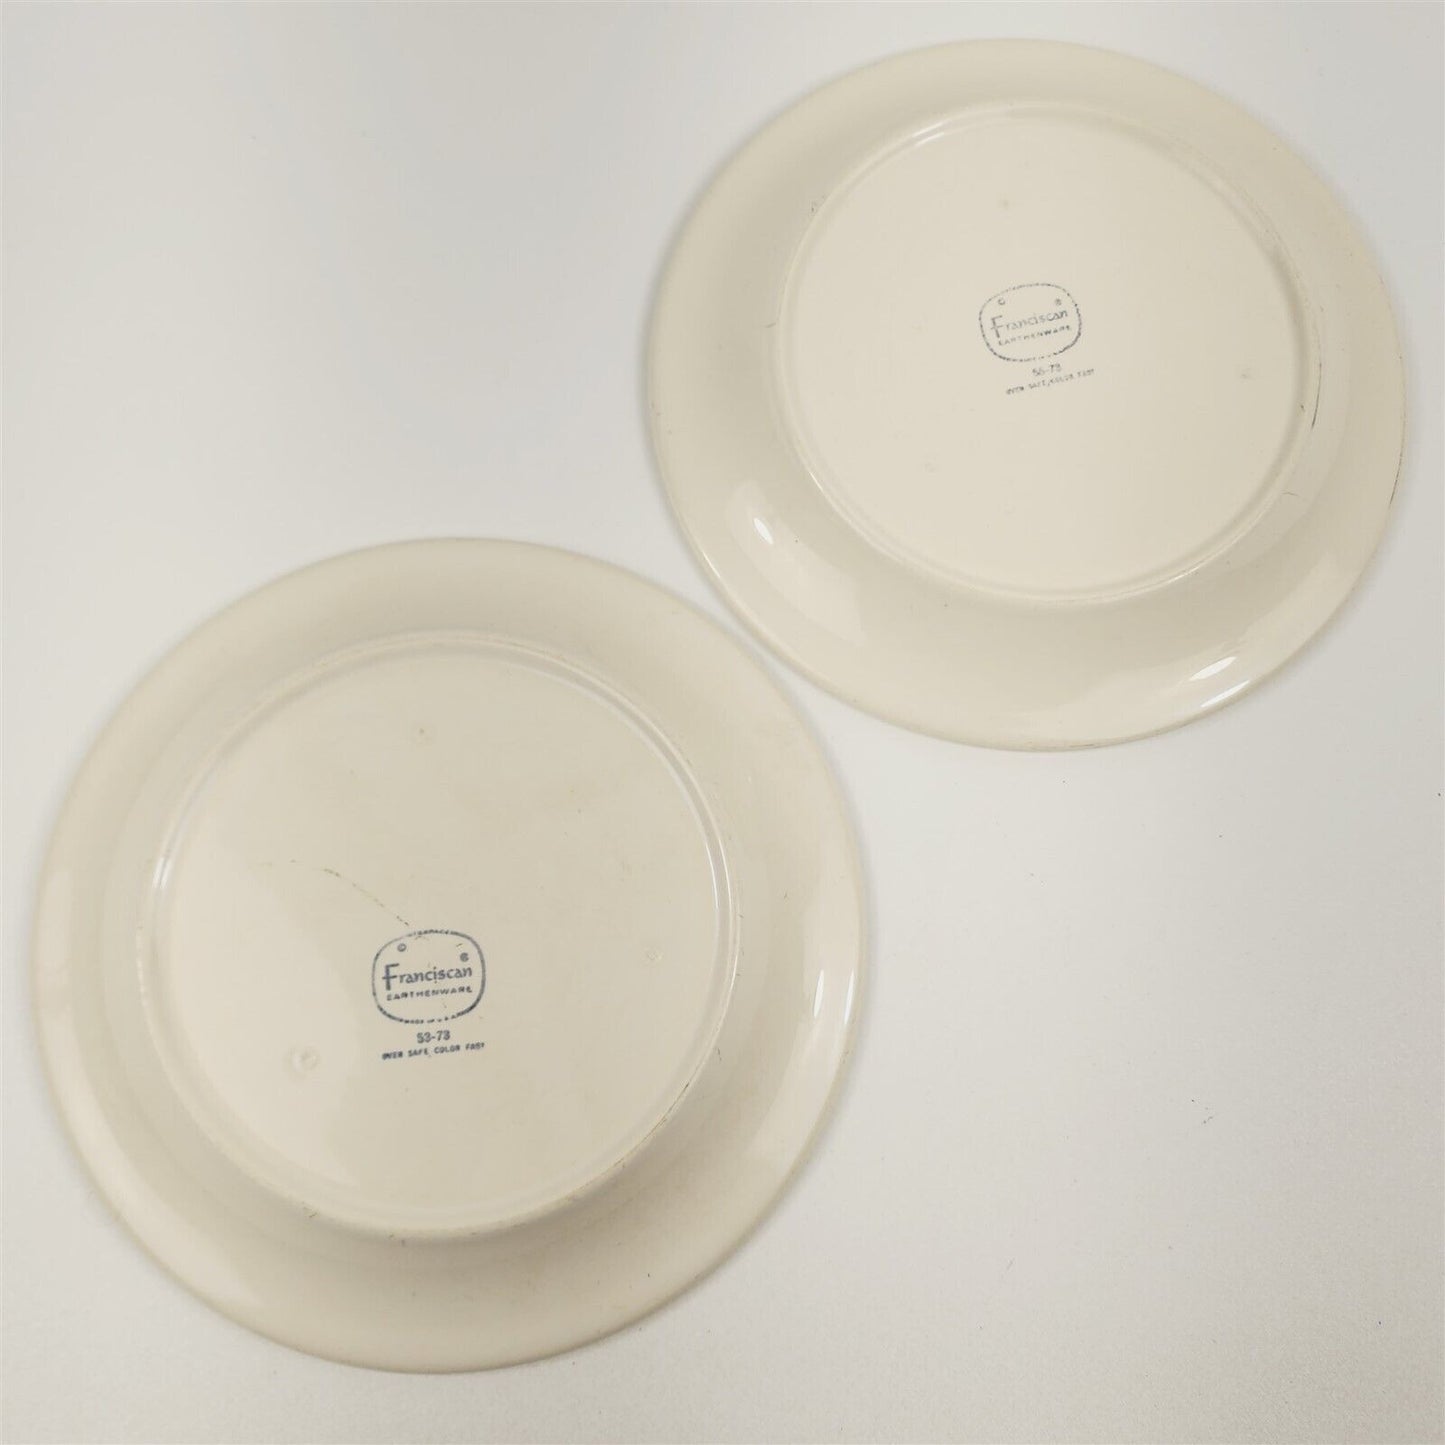 2 Vintage Franciscan Earthenware Maypole 65-73 Luncheon Plates - 8 3/4"